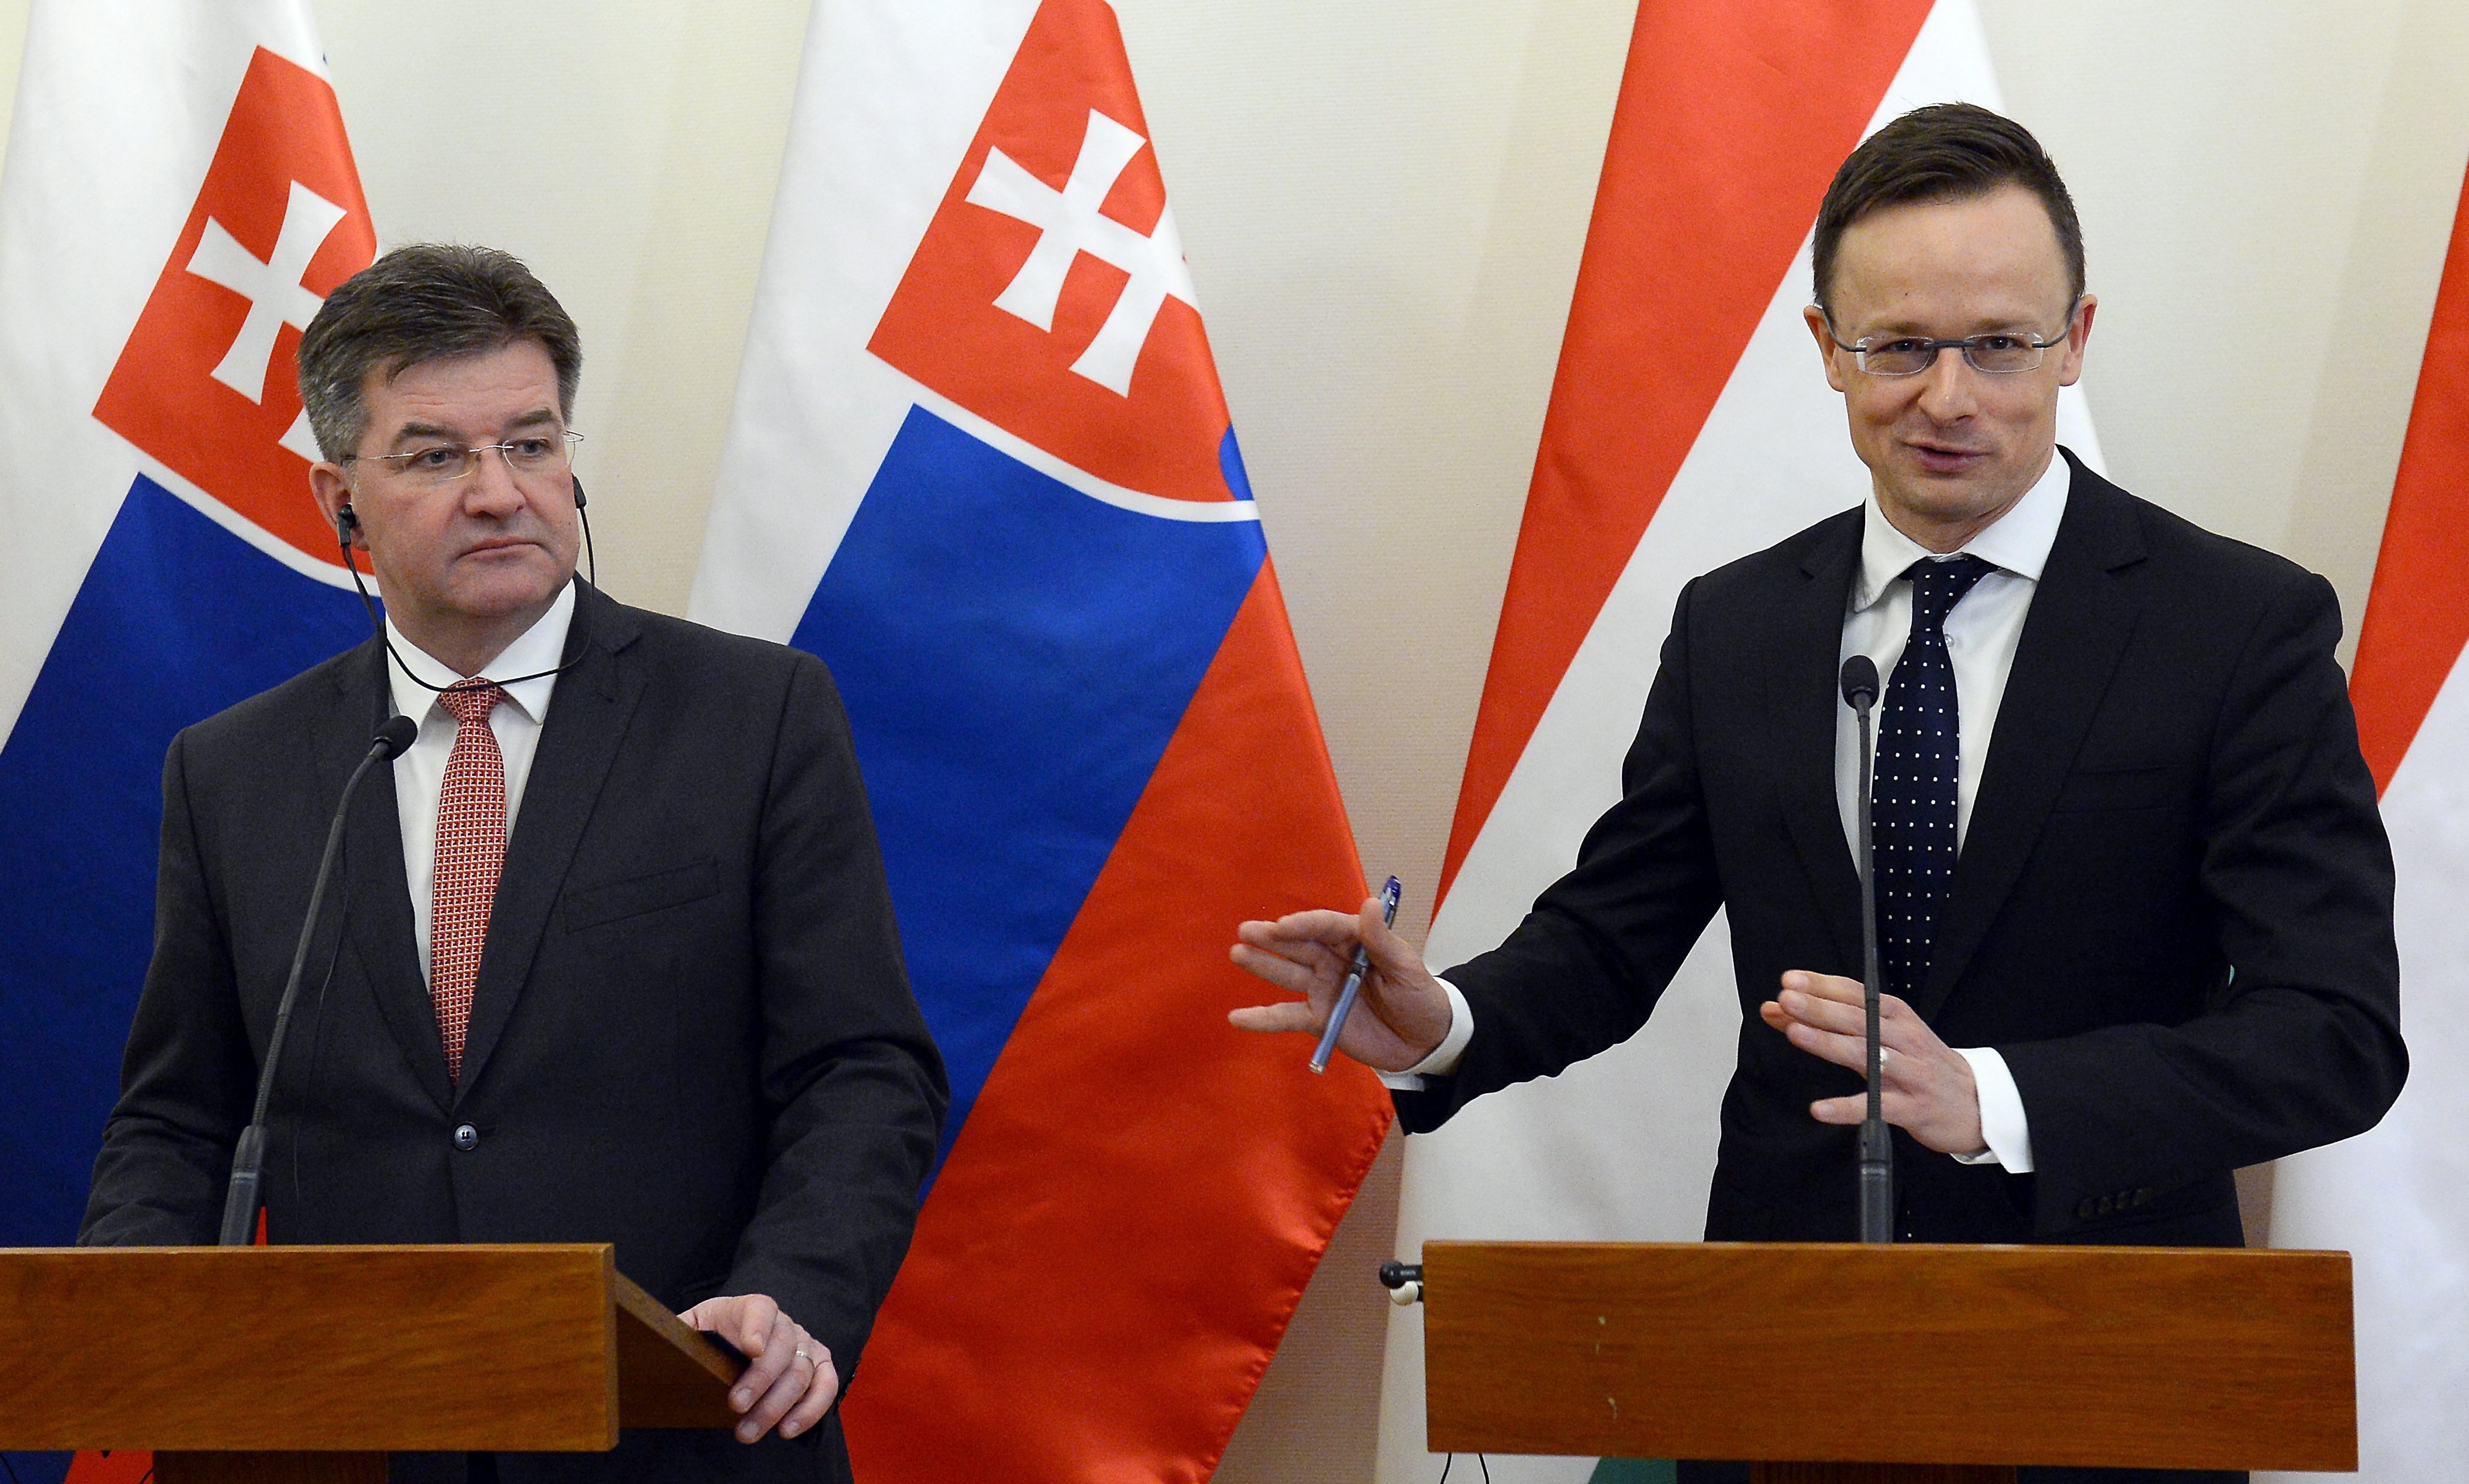 Slovakia Hungary foreign ministers